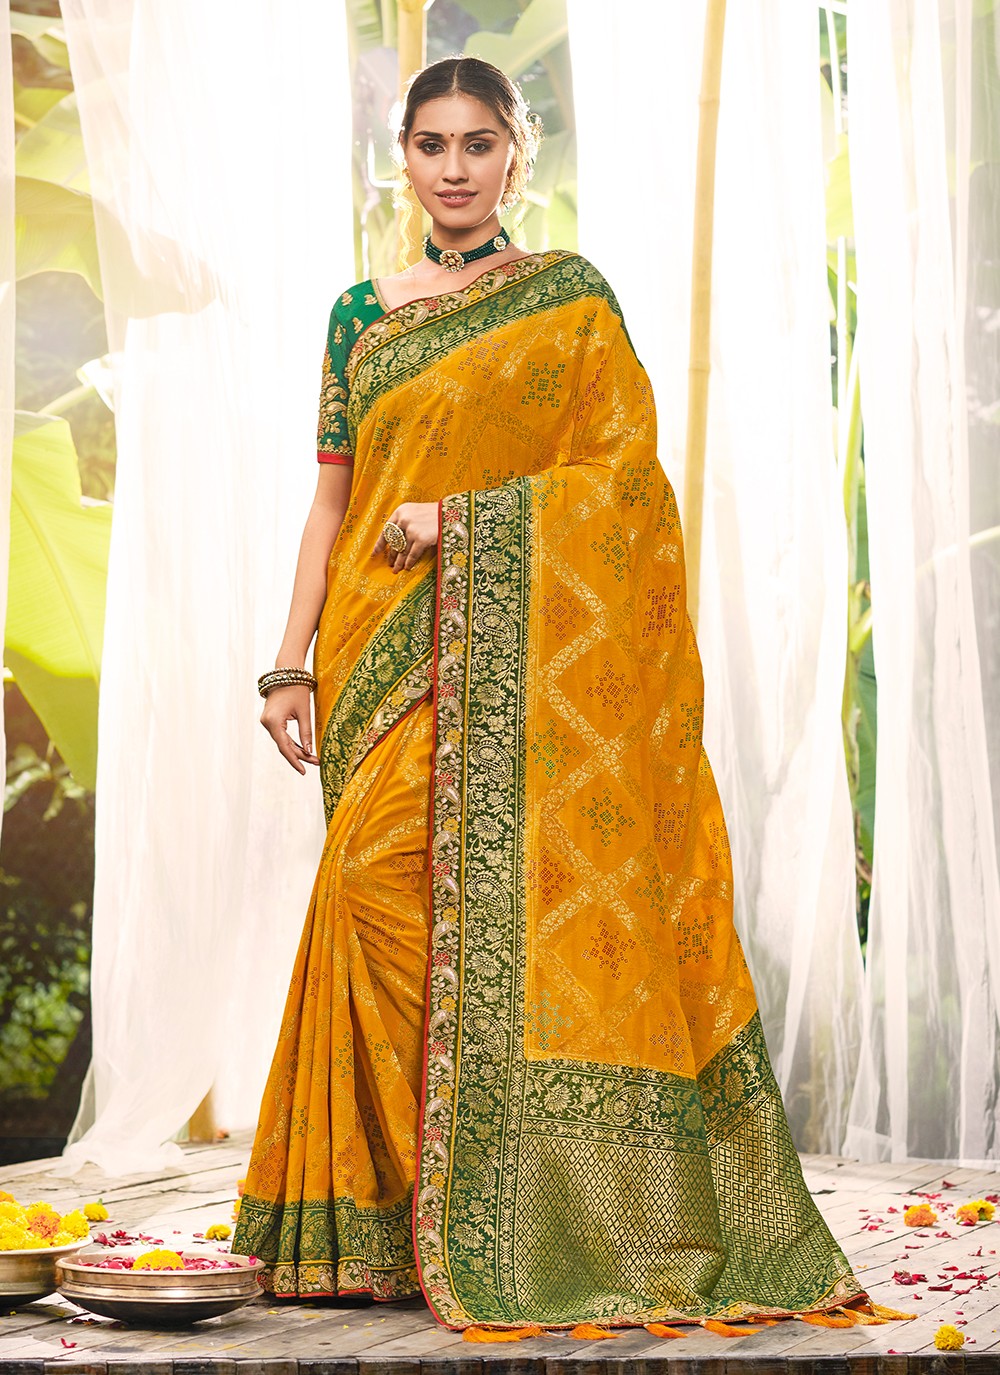 5 Ways to style your yellow saree for Haldi functions - zarahatkeblog